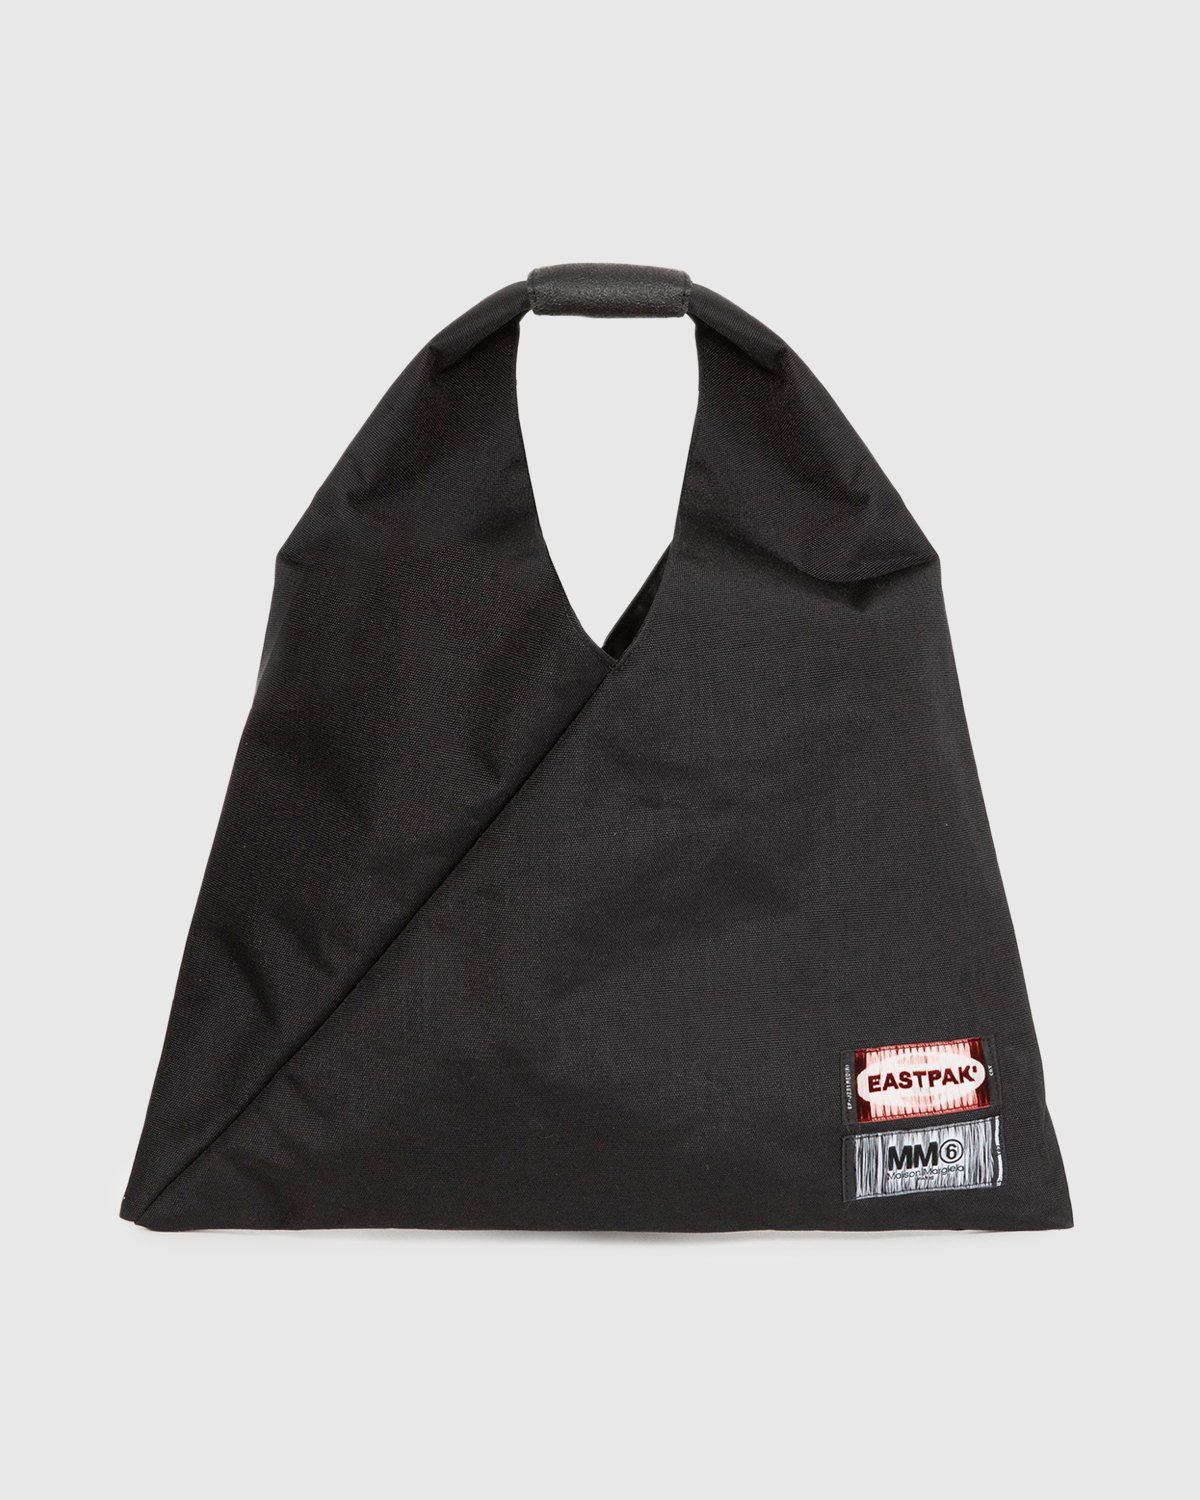 MM6 Maison Margiela x Eastpak – Shopping Bag Black - Tote Bags - Black - Image 1